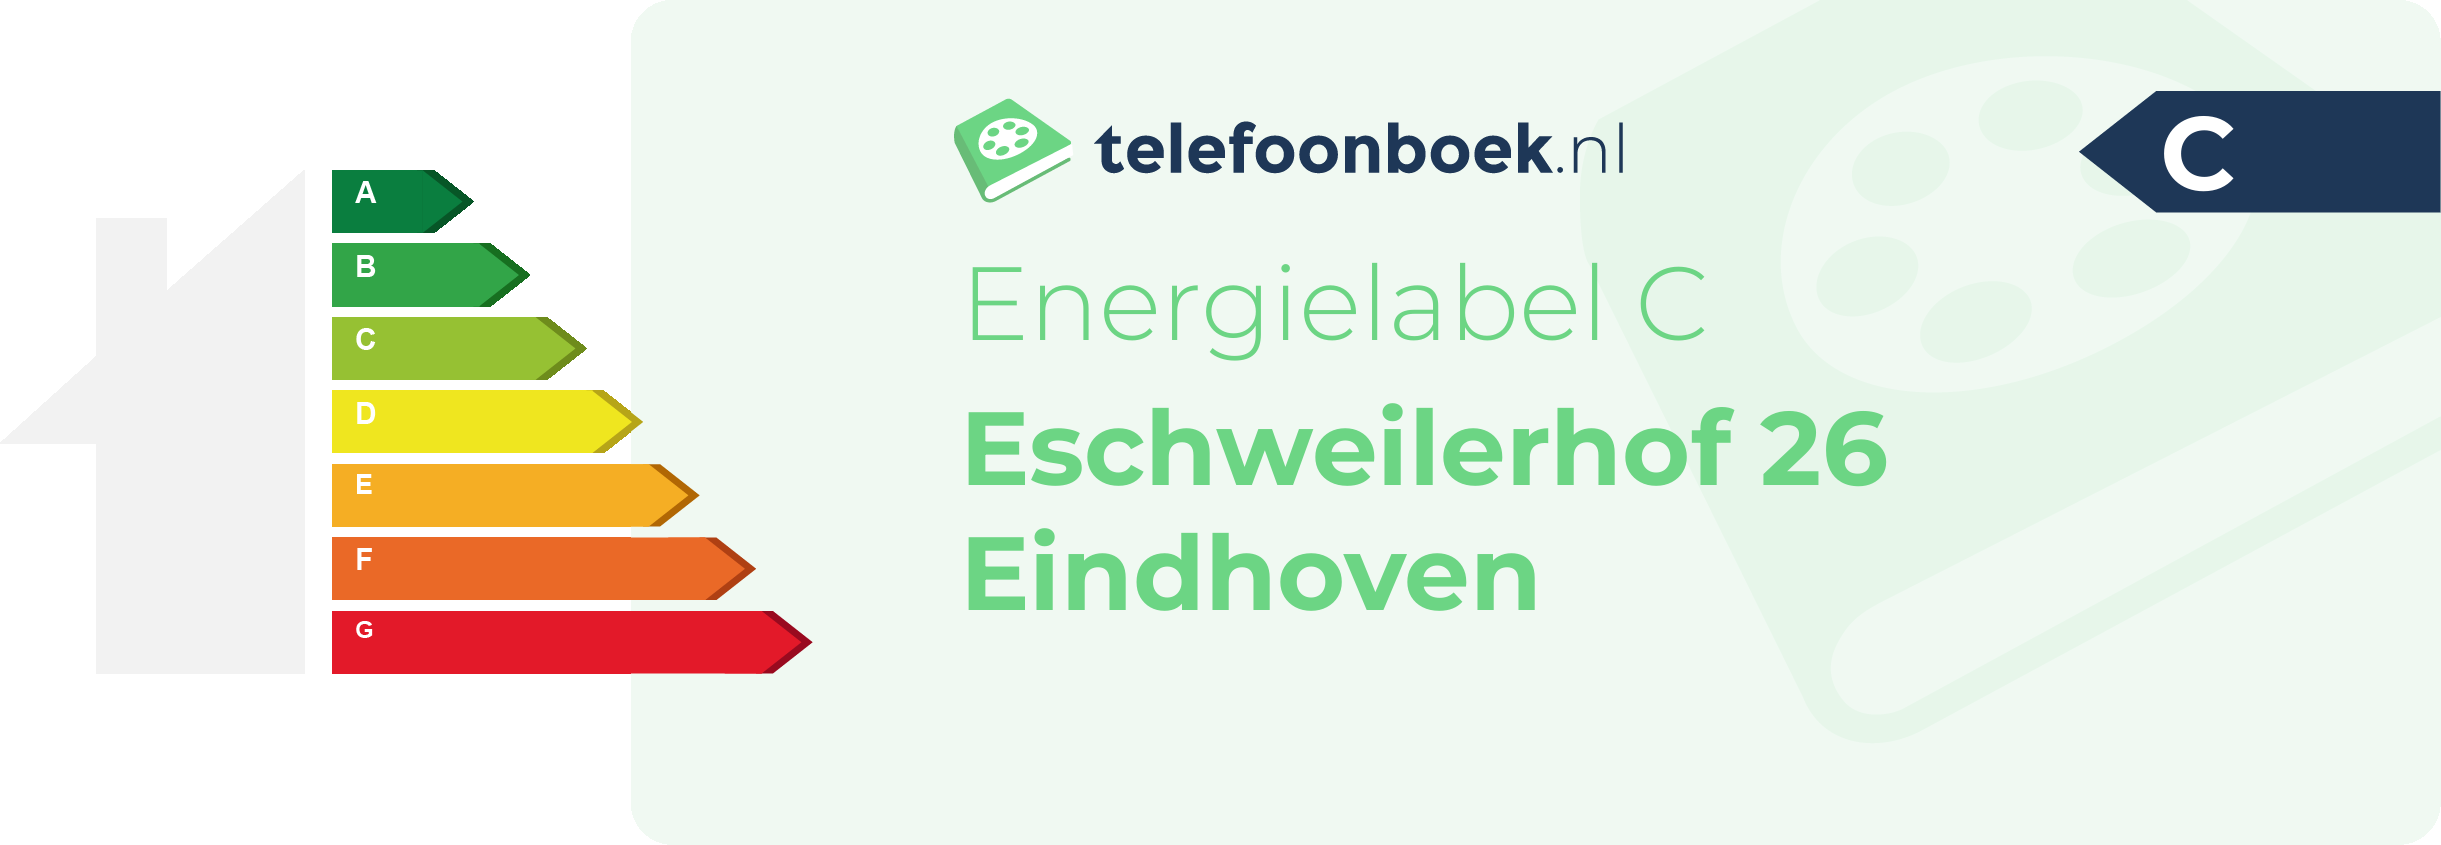 Energielabel Eschweilerhof 26 Eindhoven